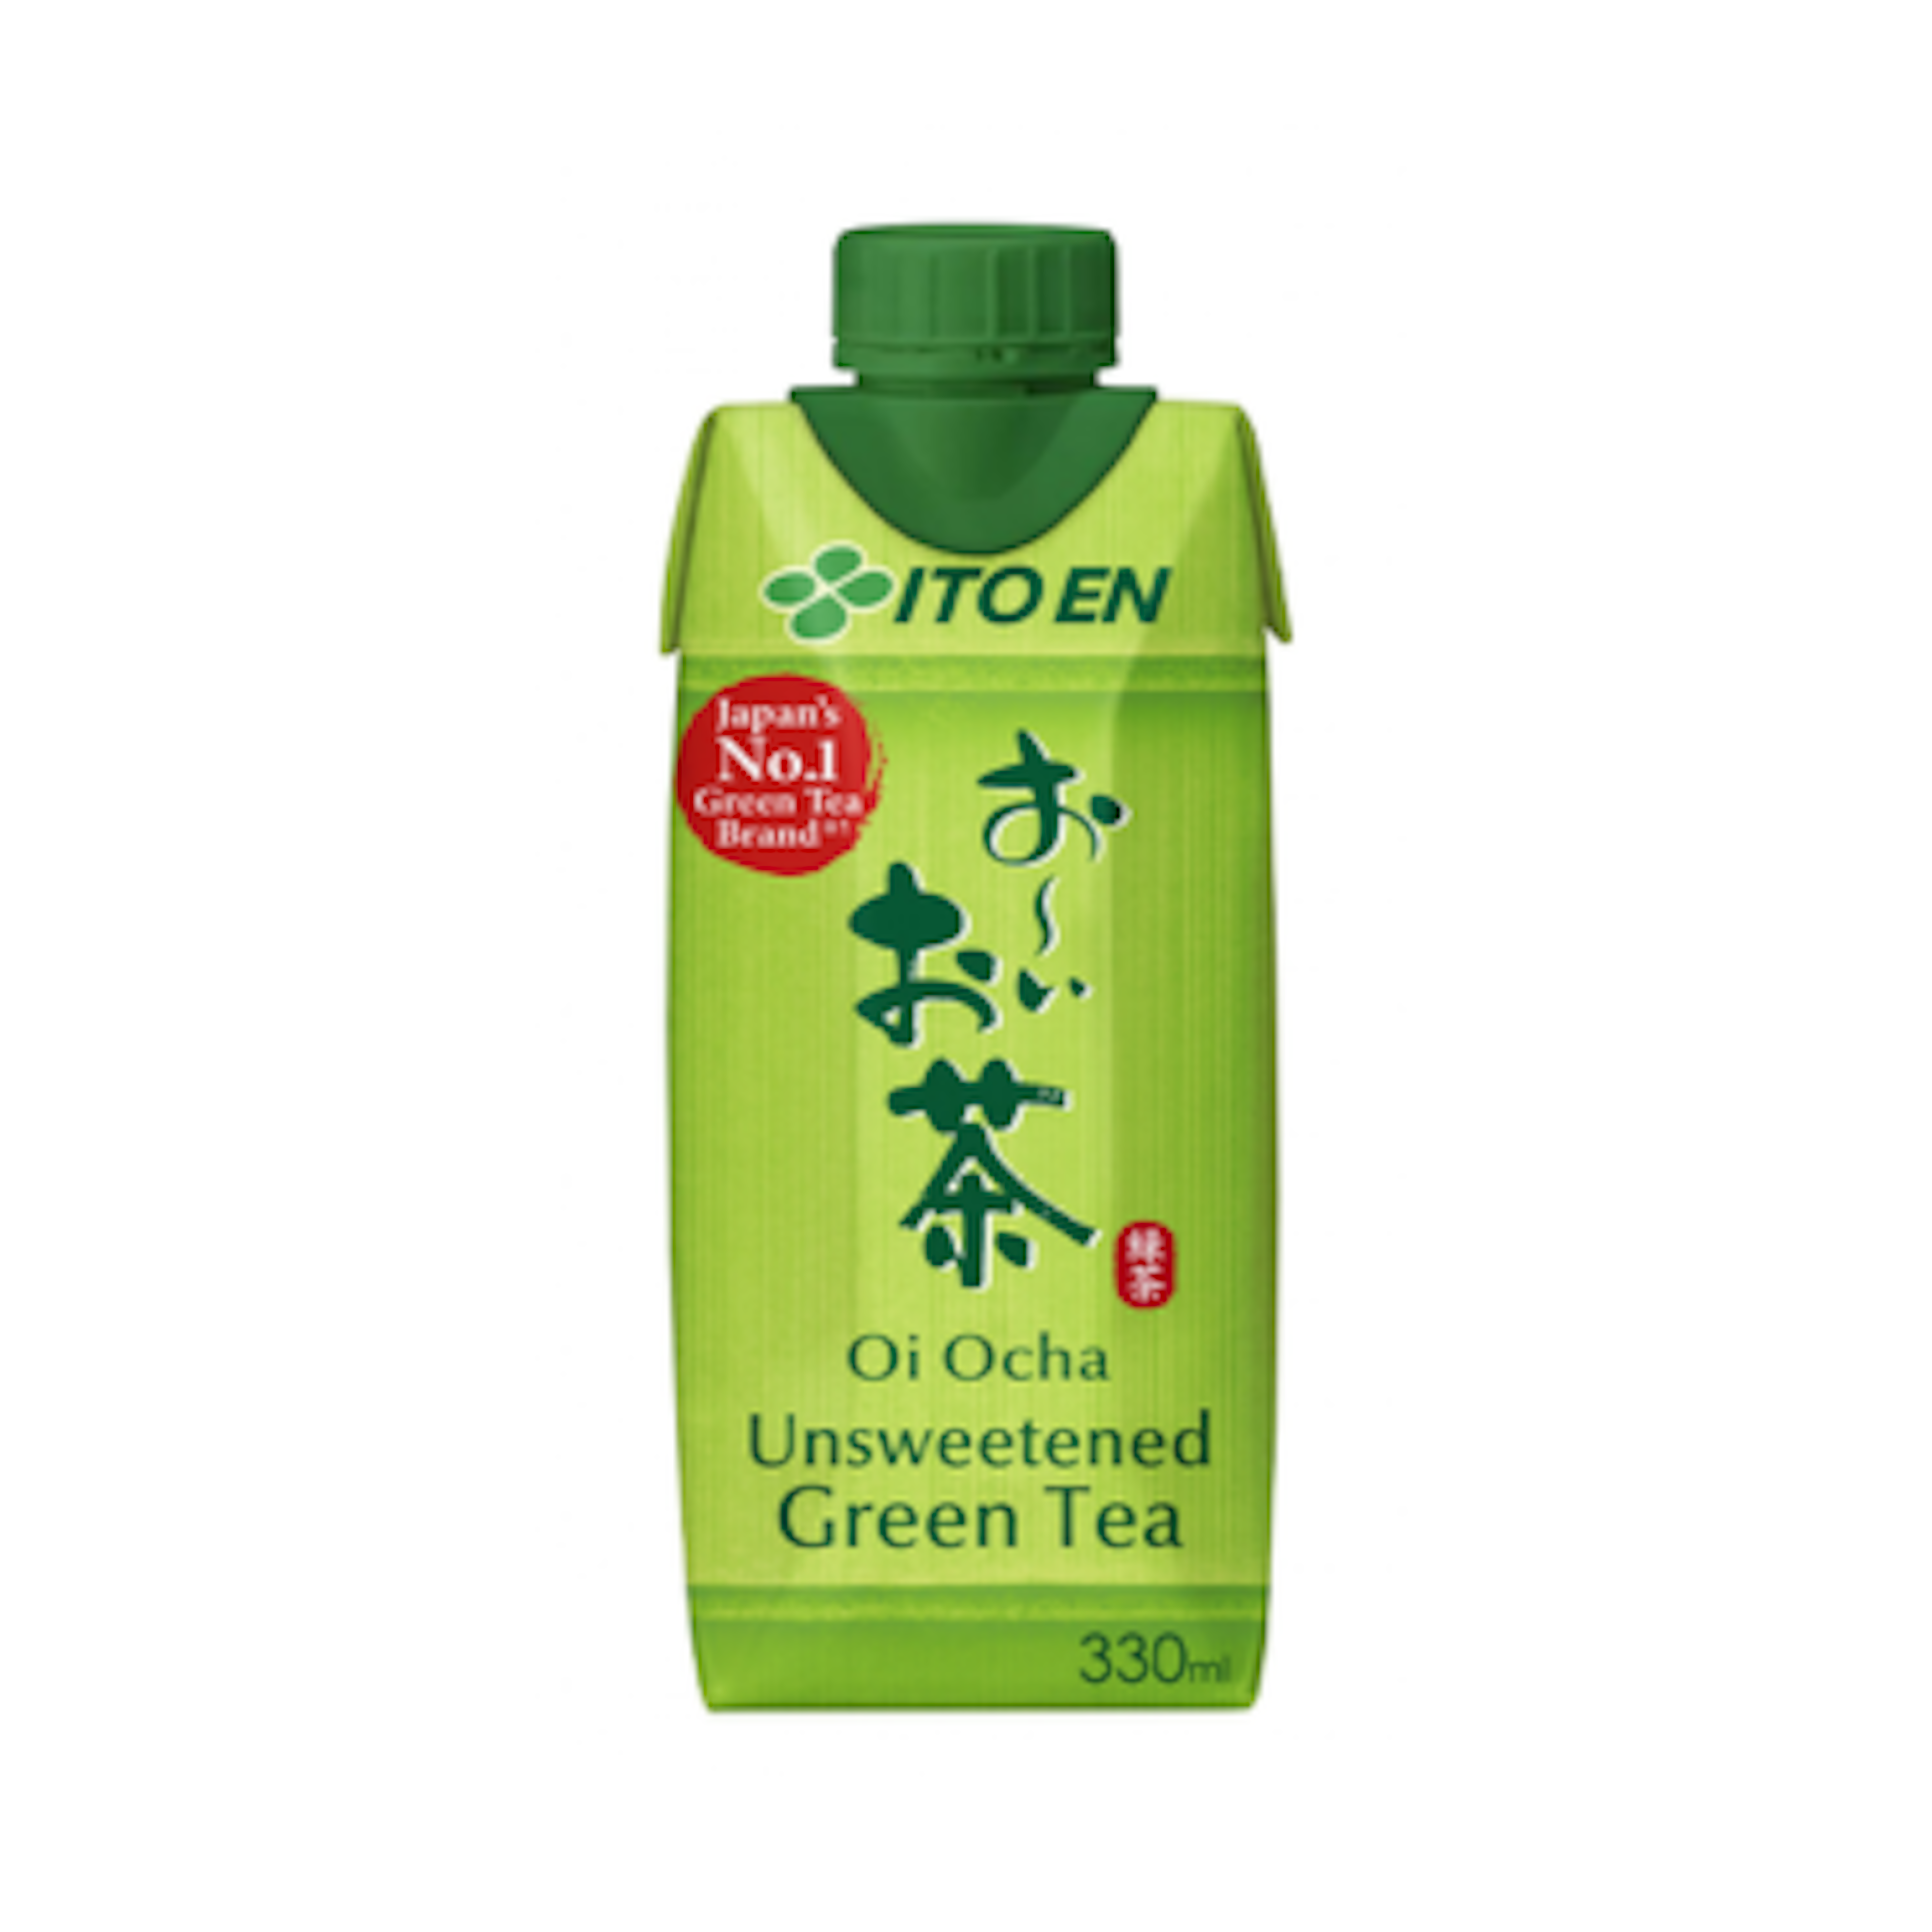 Ito En Oi Ocha Grüner Tee - Authentischer grüner Tee aus Japan, 330ml